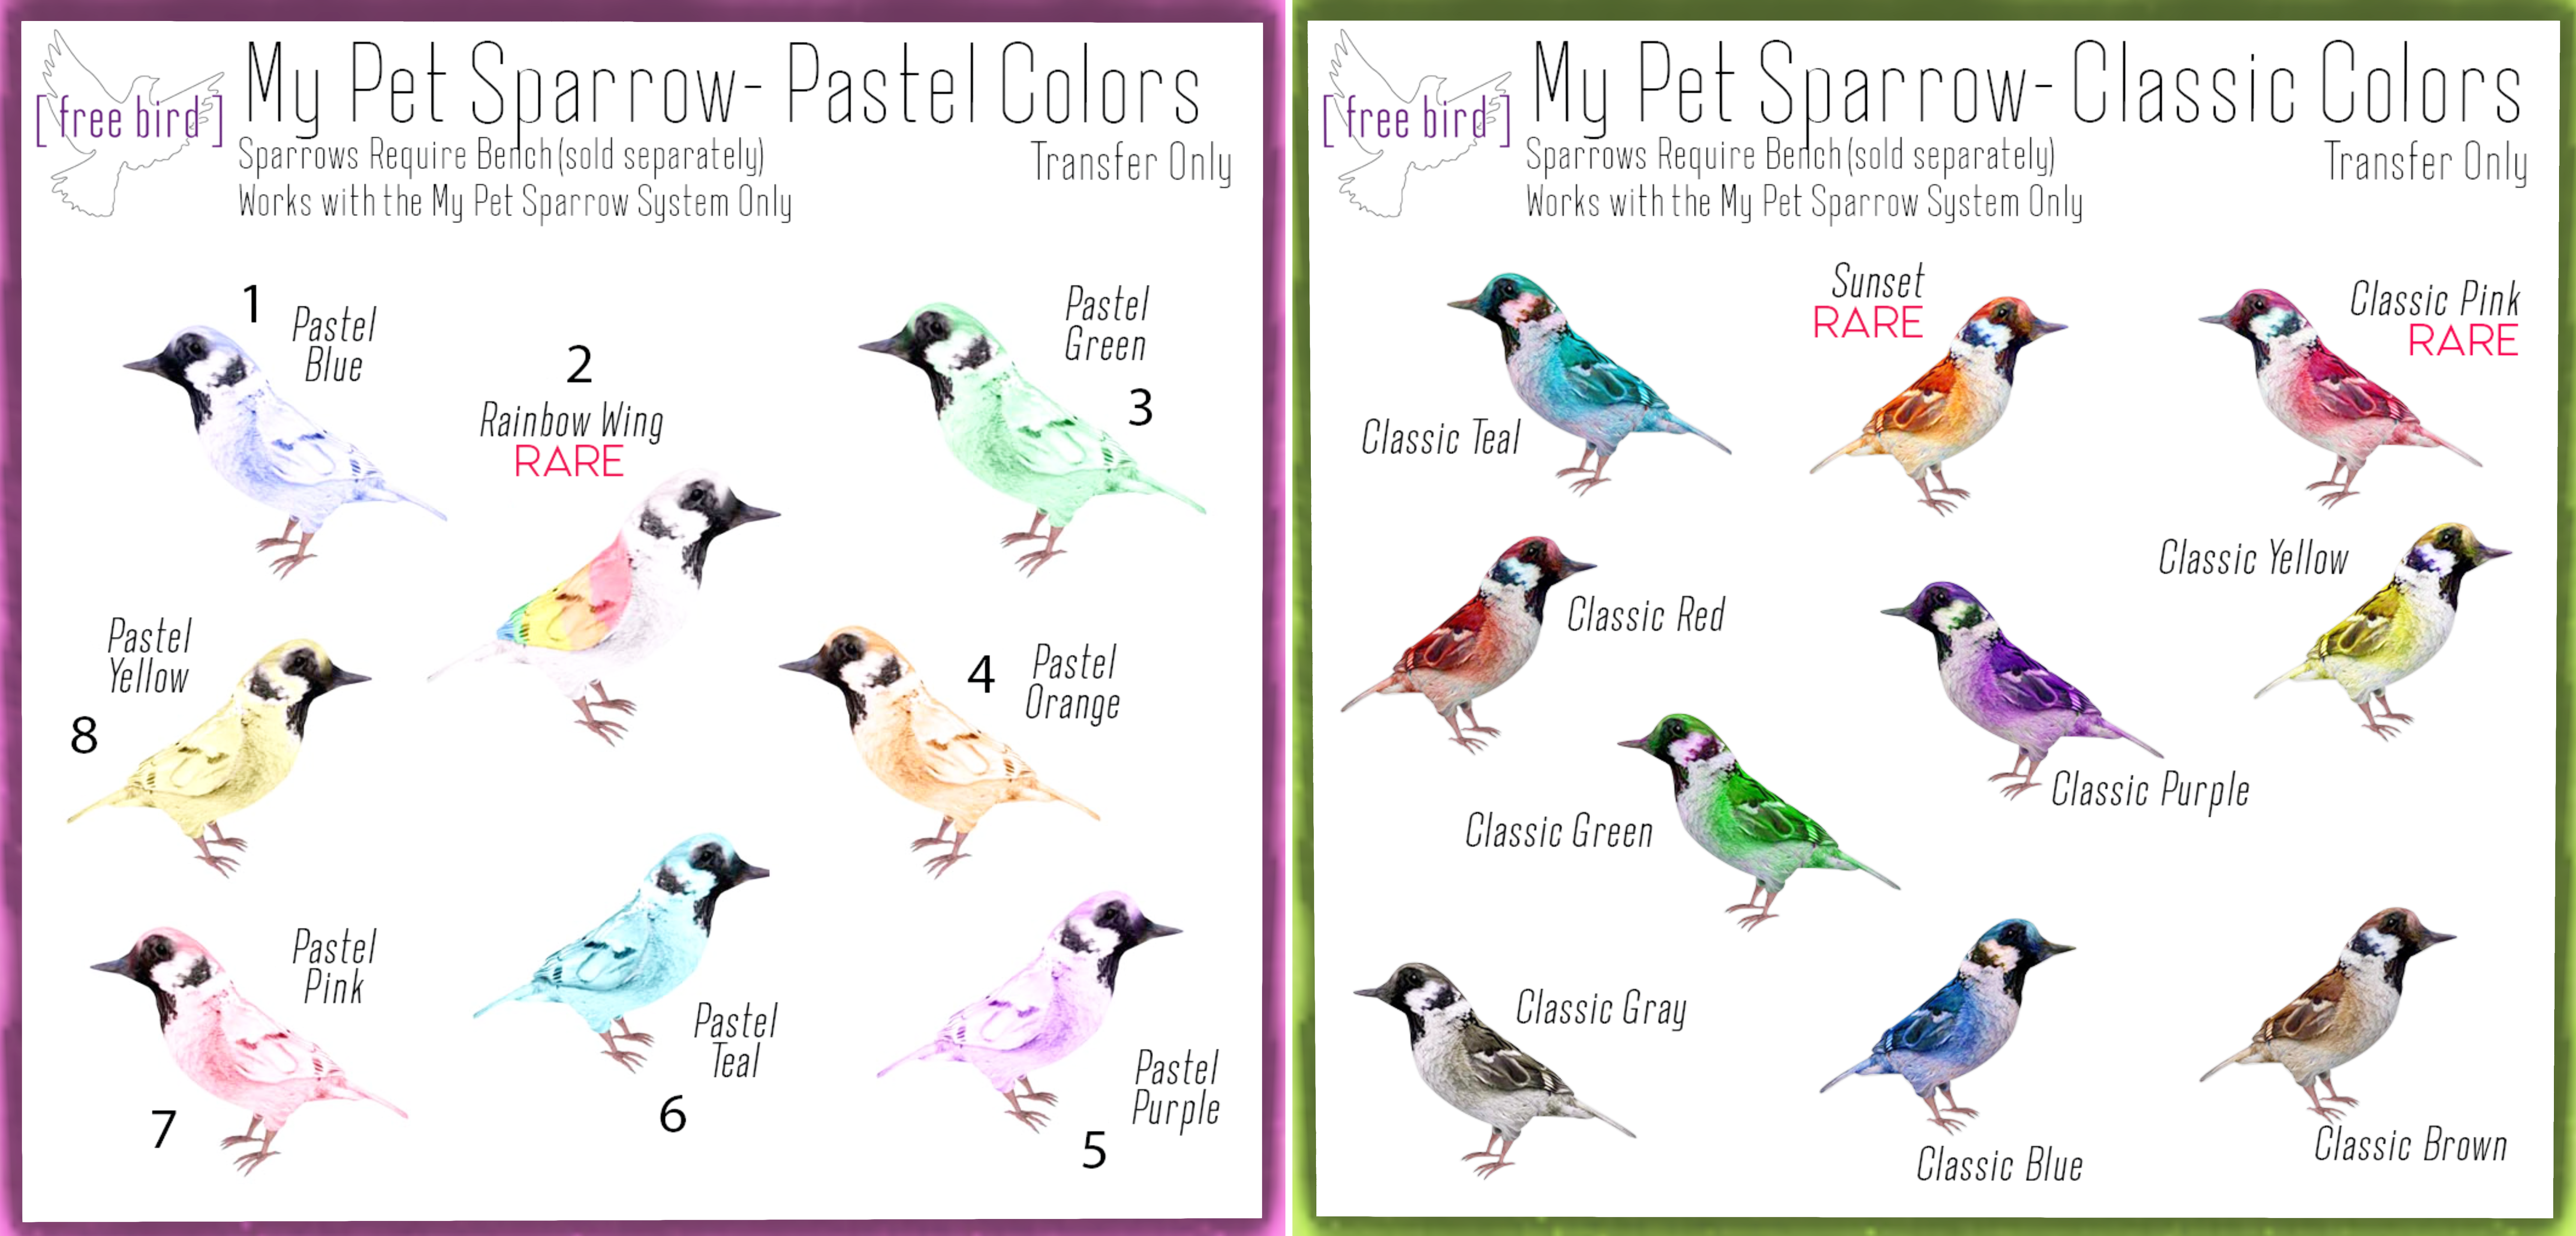 Free Bird – My Pet Sparrow